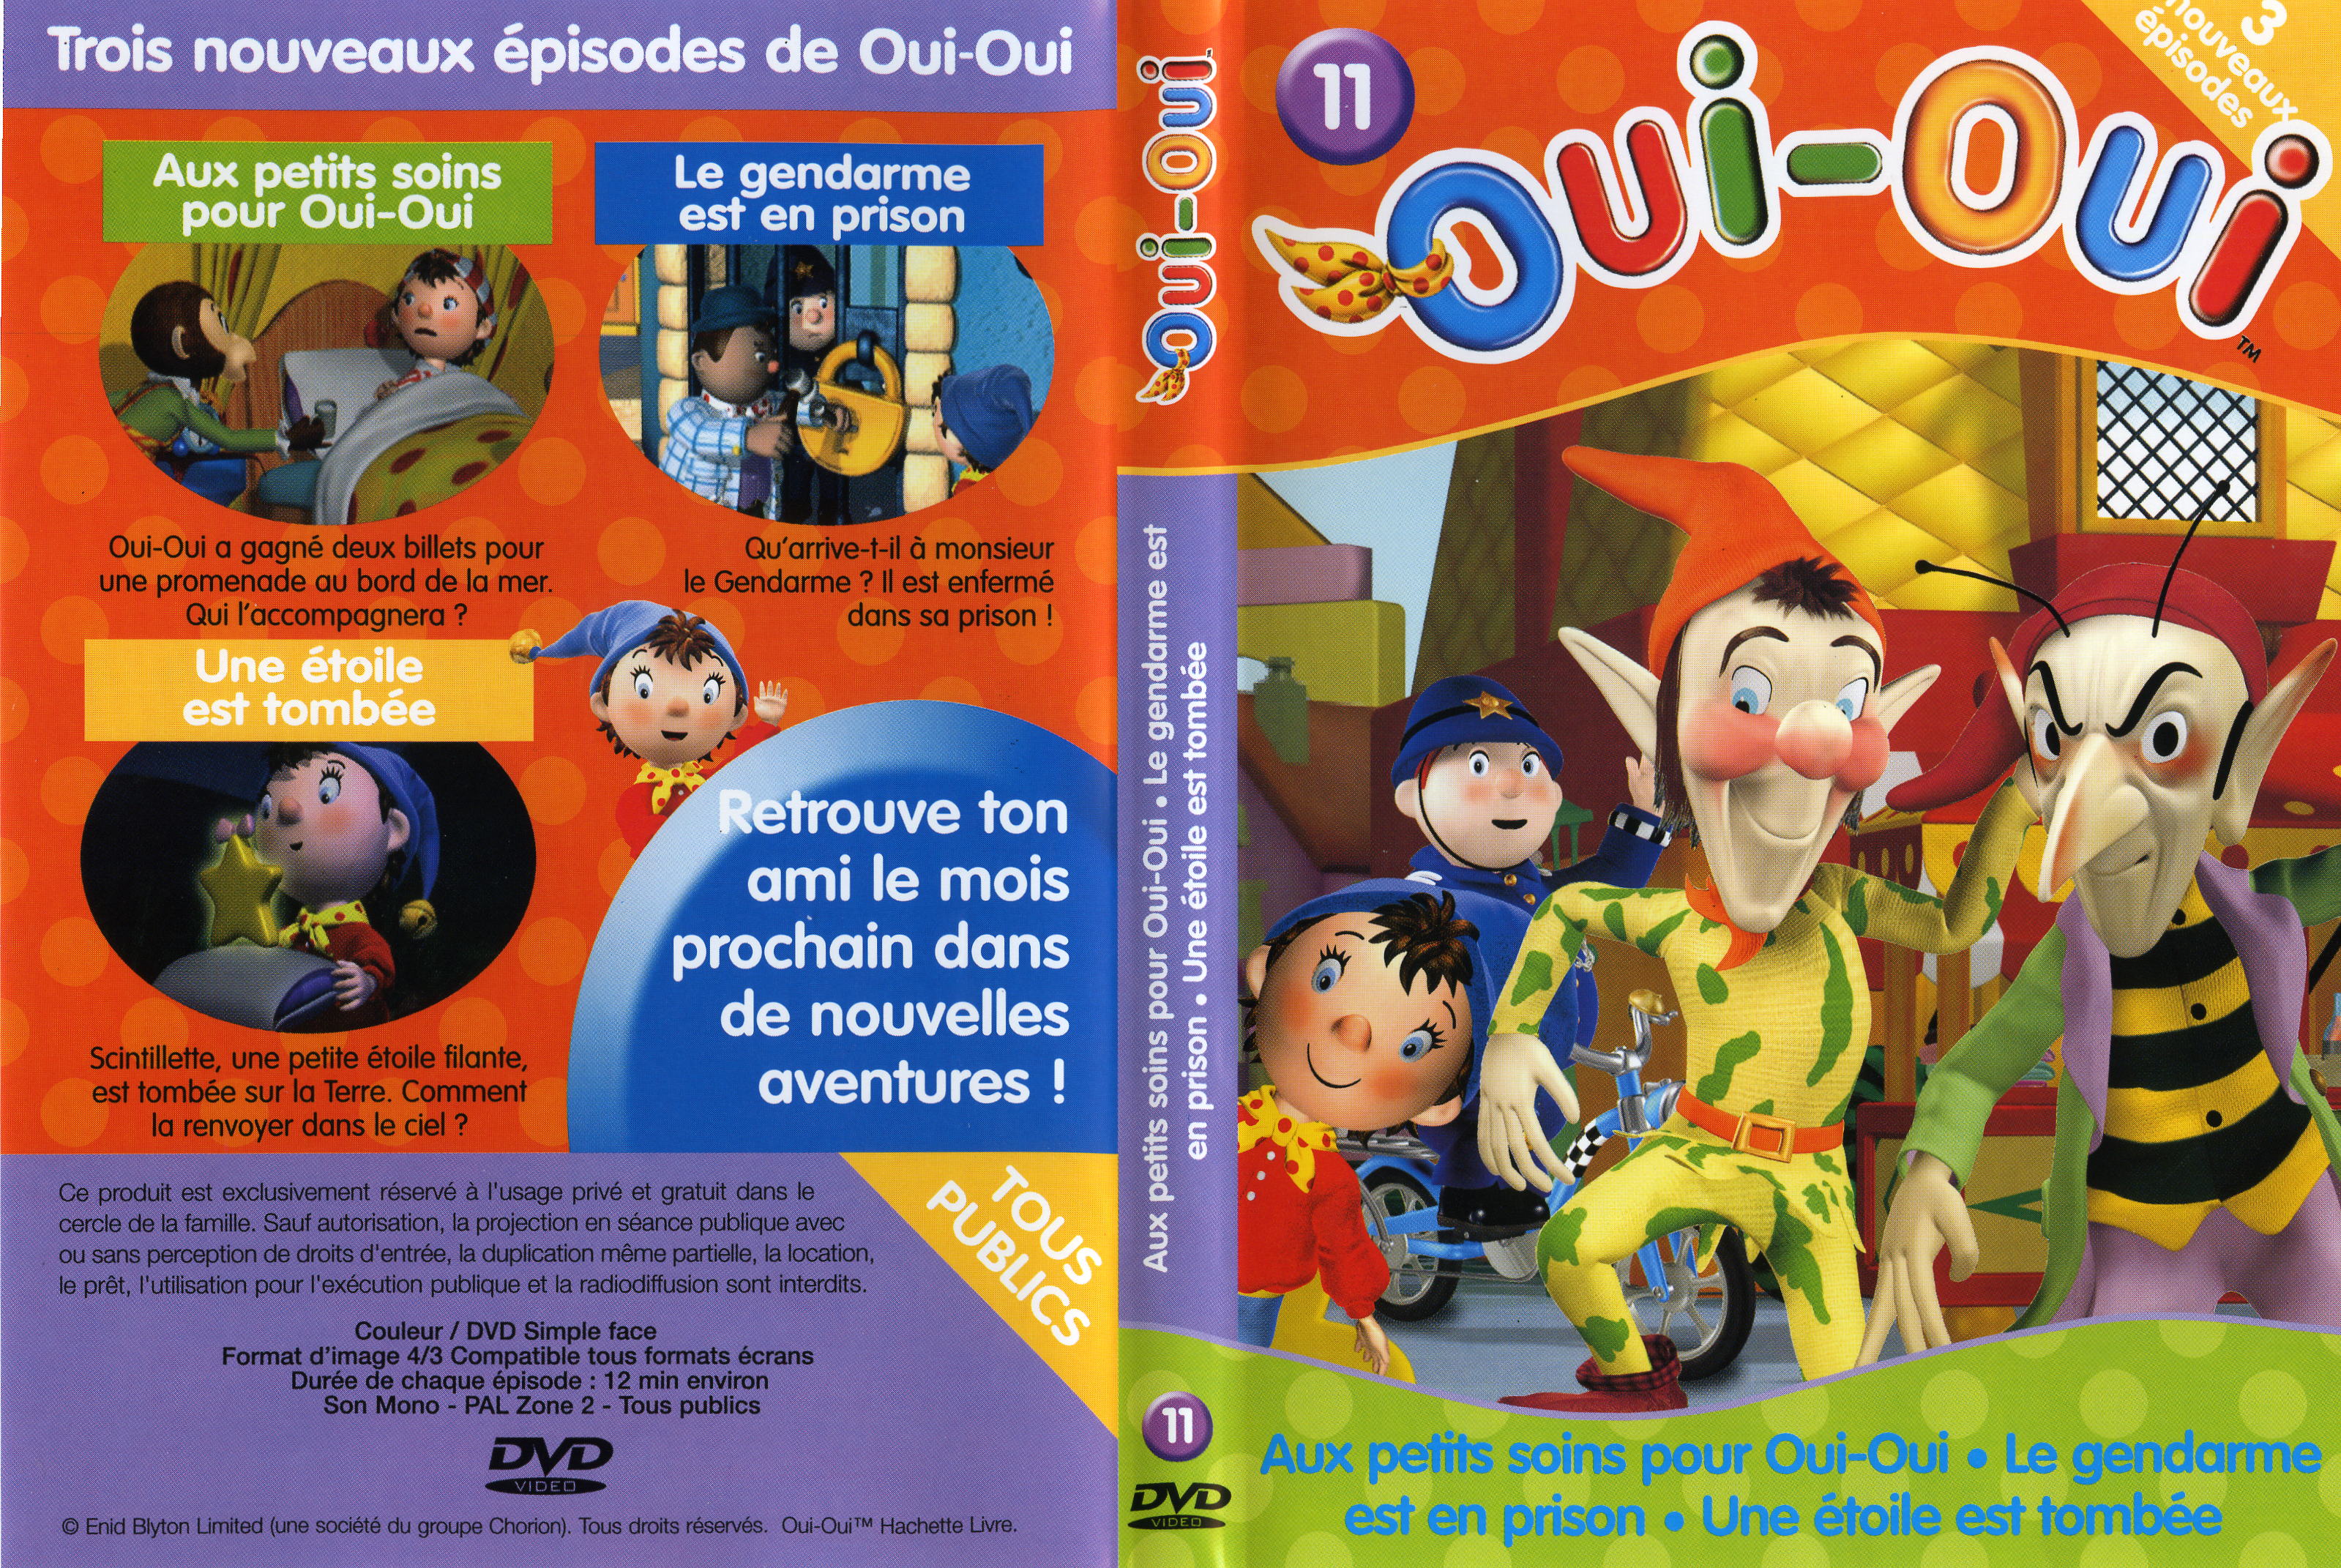 Jaquette DVD Oui-oui vol 11